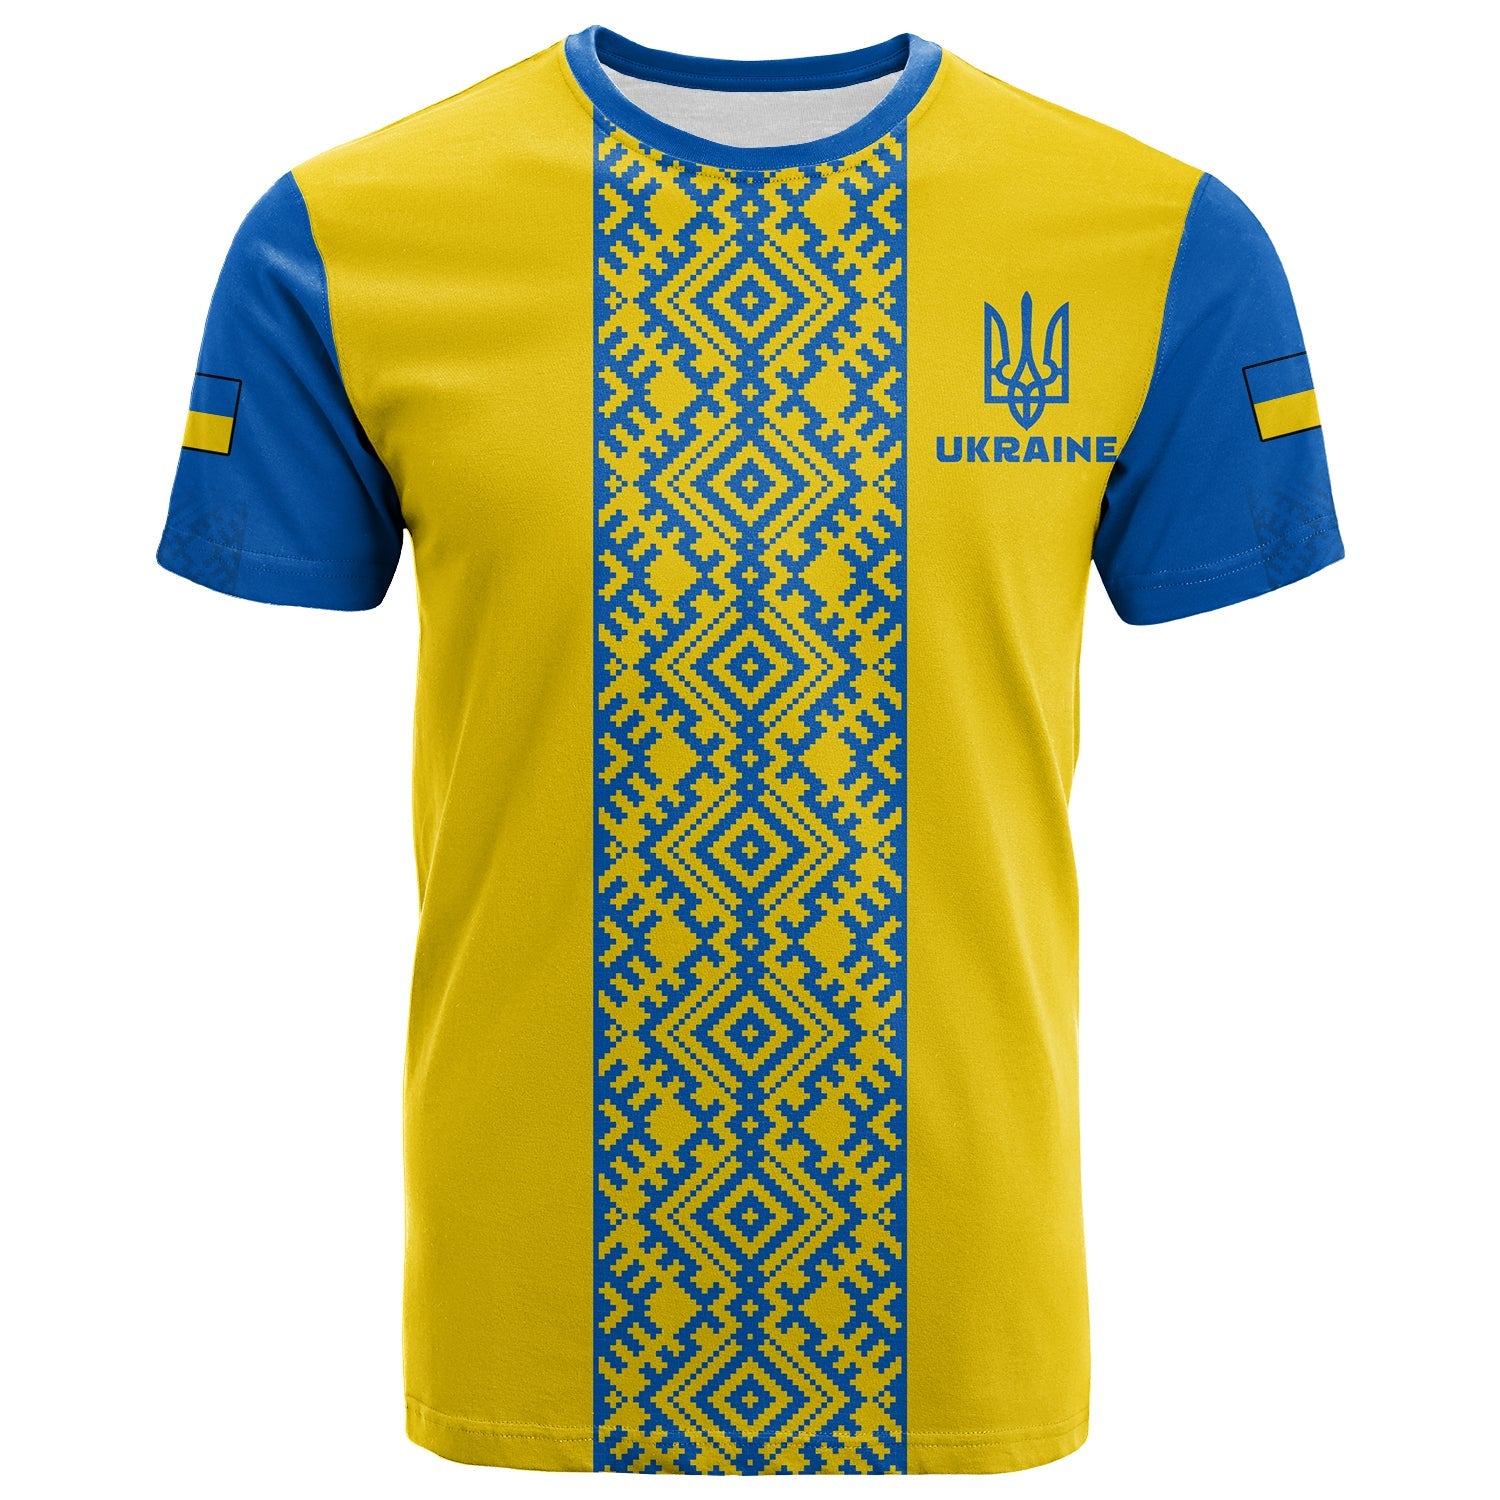 ukraine-t-shirt-ukrainian-pattern